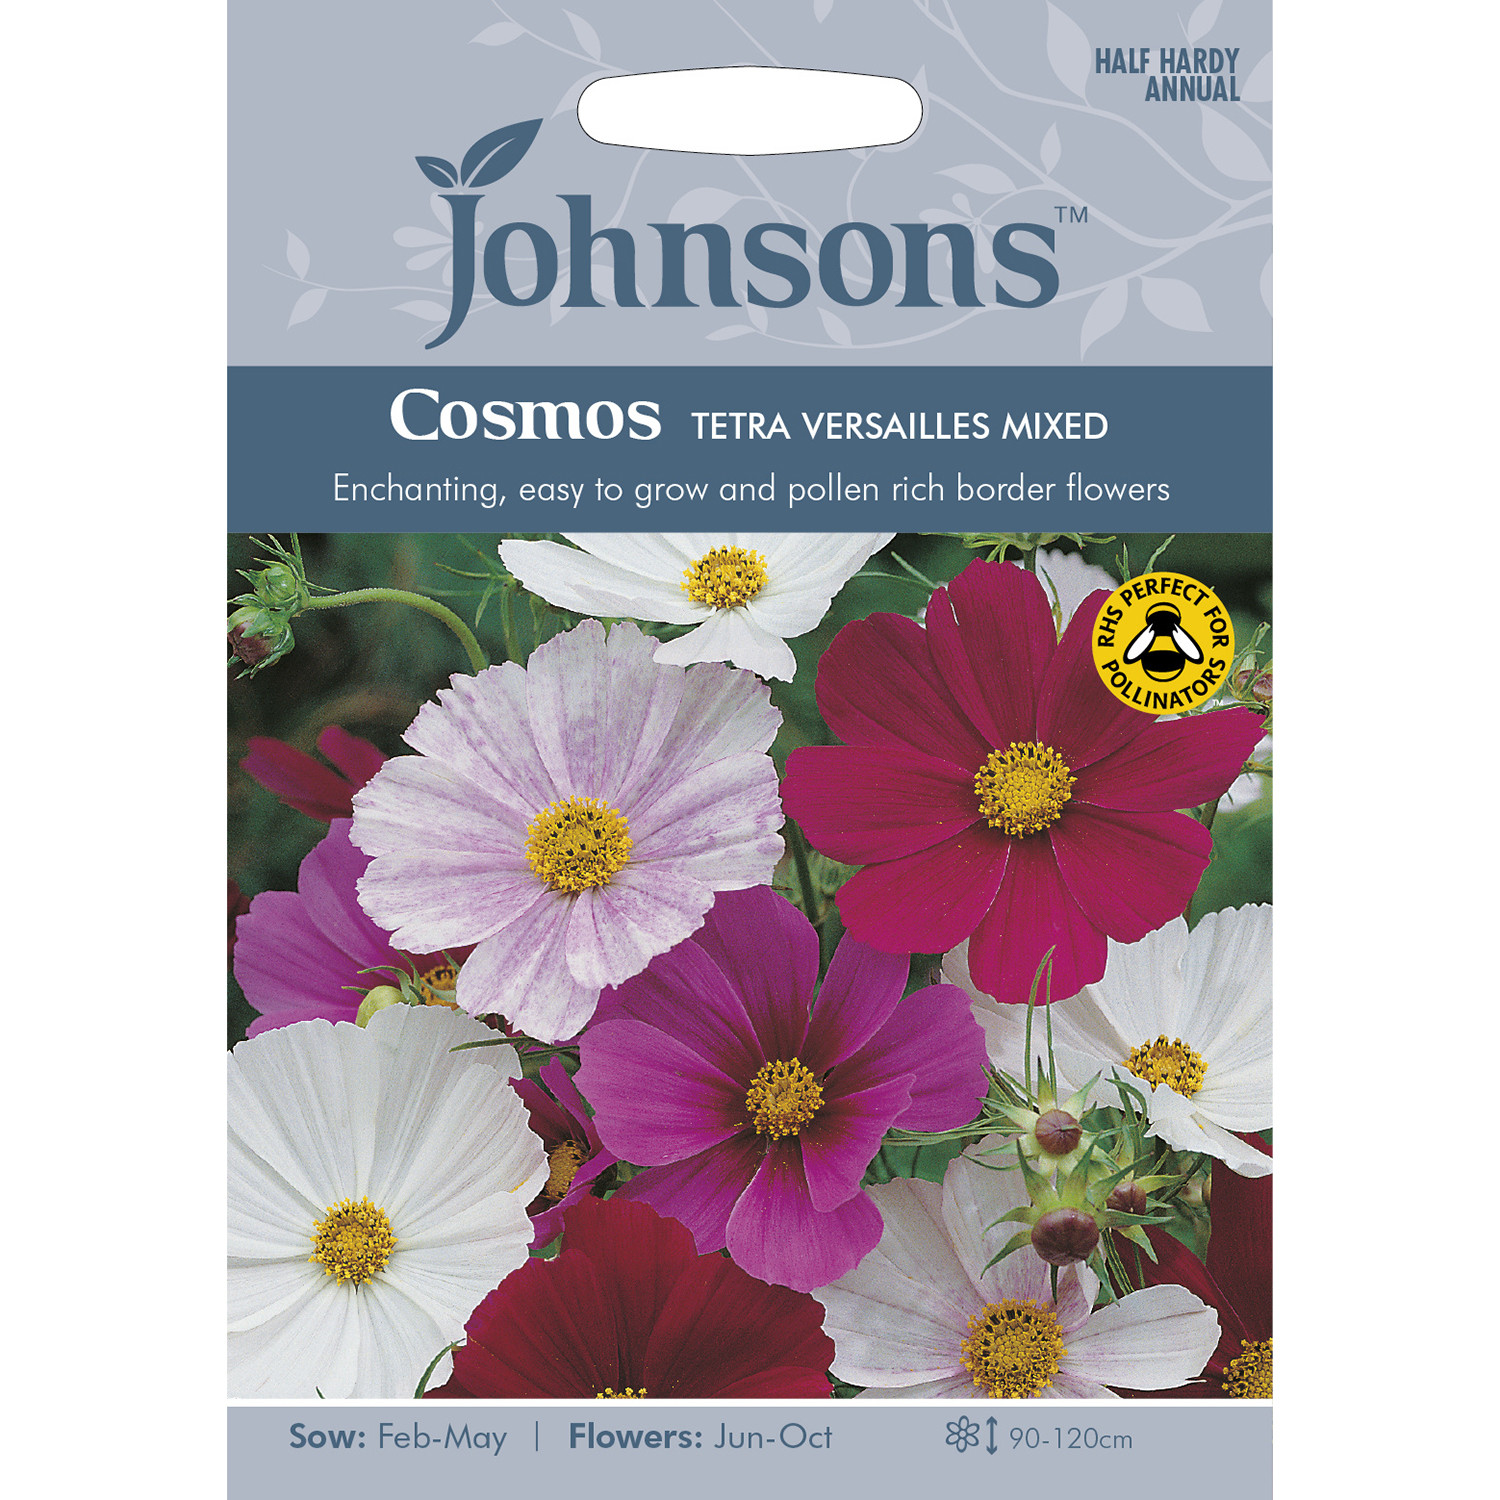 Johnsons Cosmos Tetra Versailles Mixed Flower Seeds Image 2